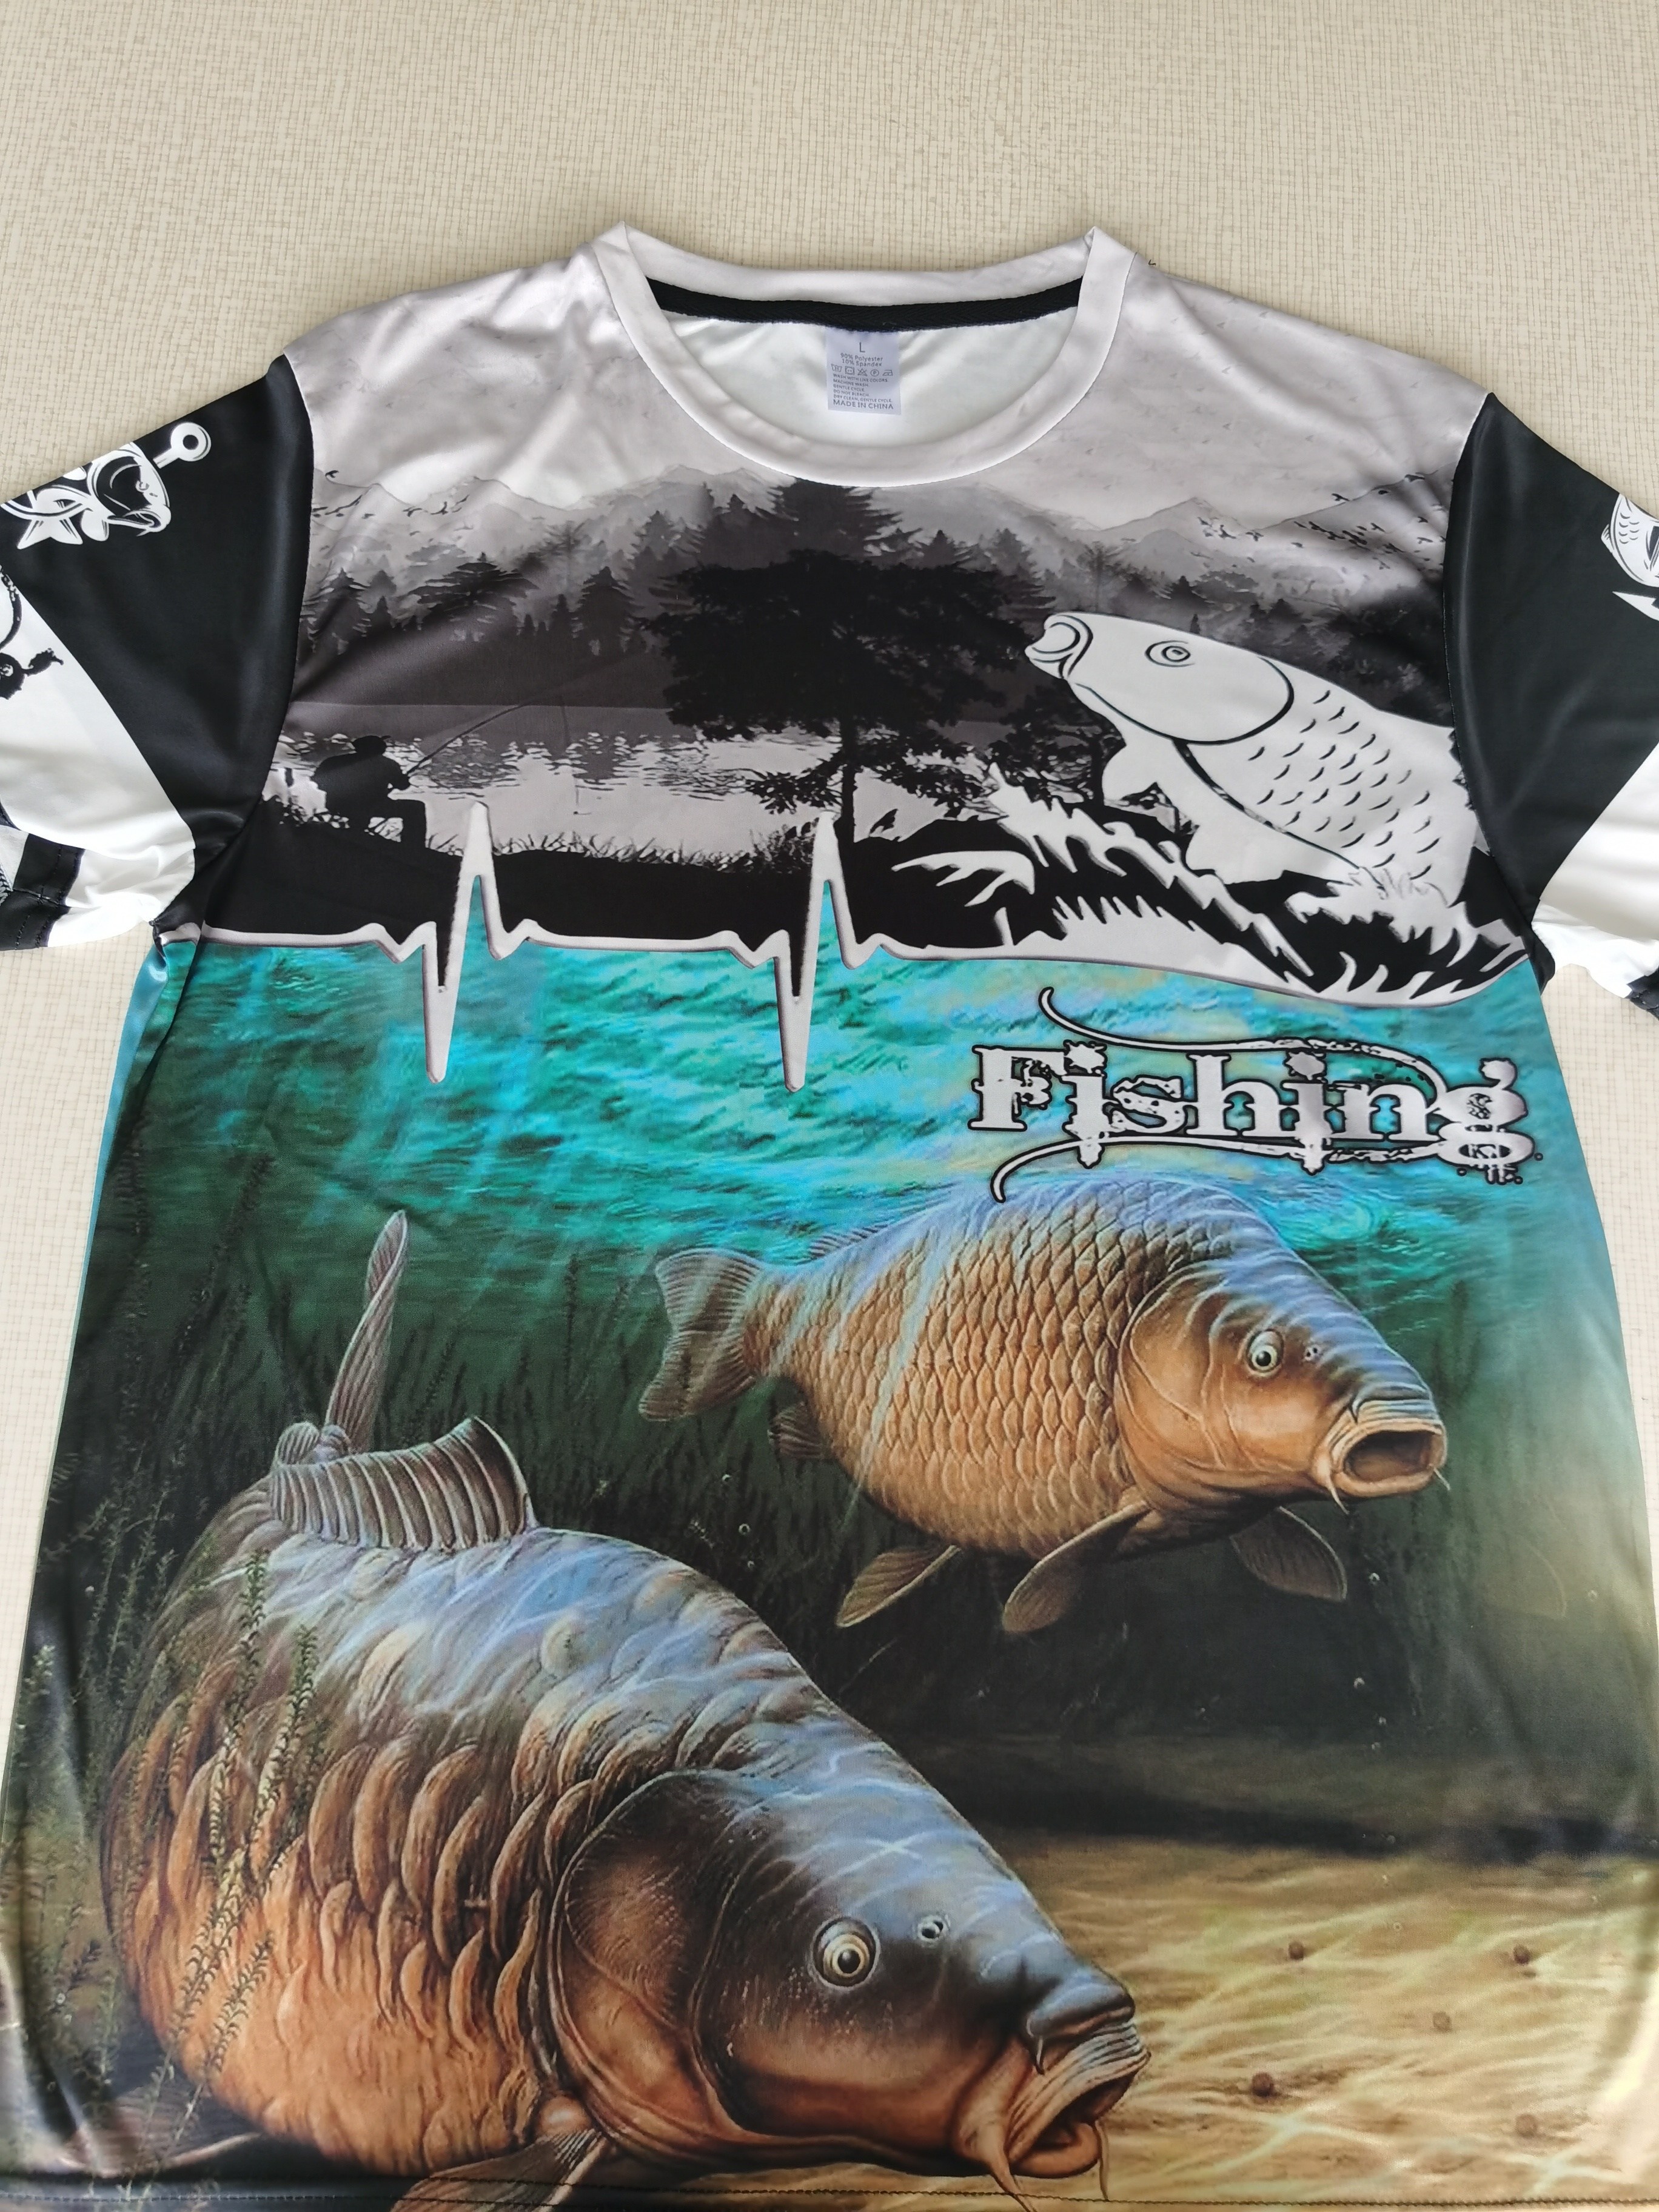 Carpaholic Fishing Angling Carping Mens T-Shirt 10 Colours (S-3XL